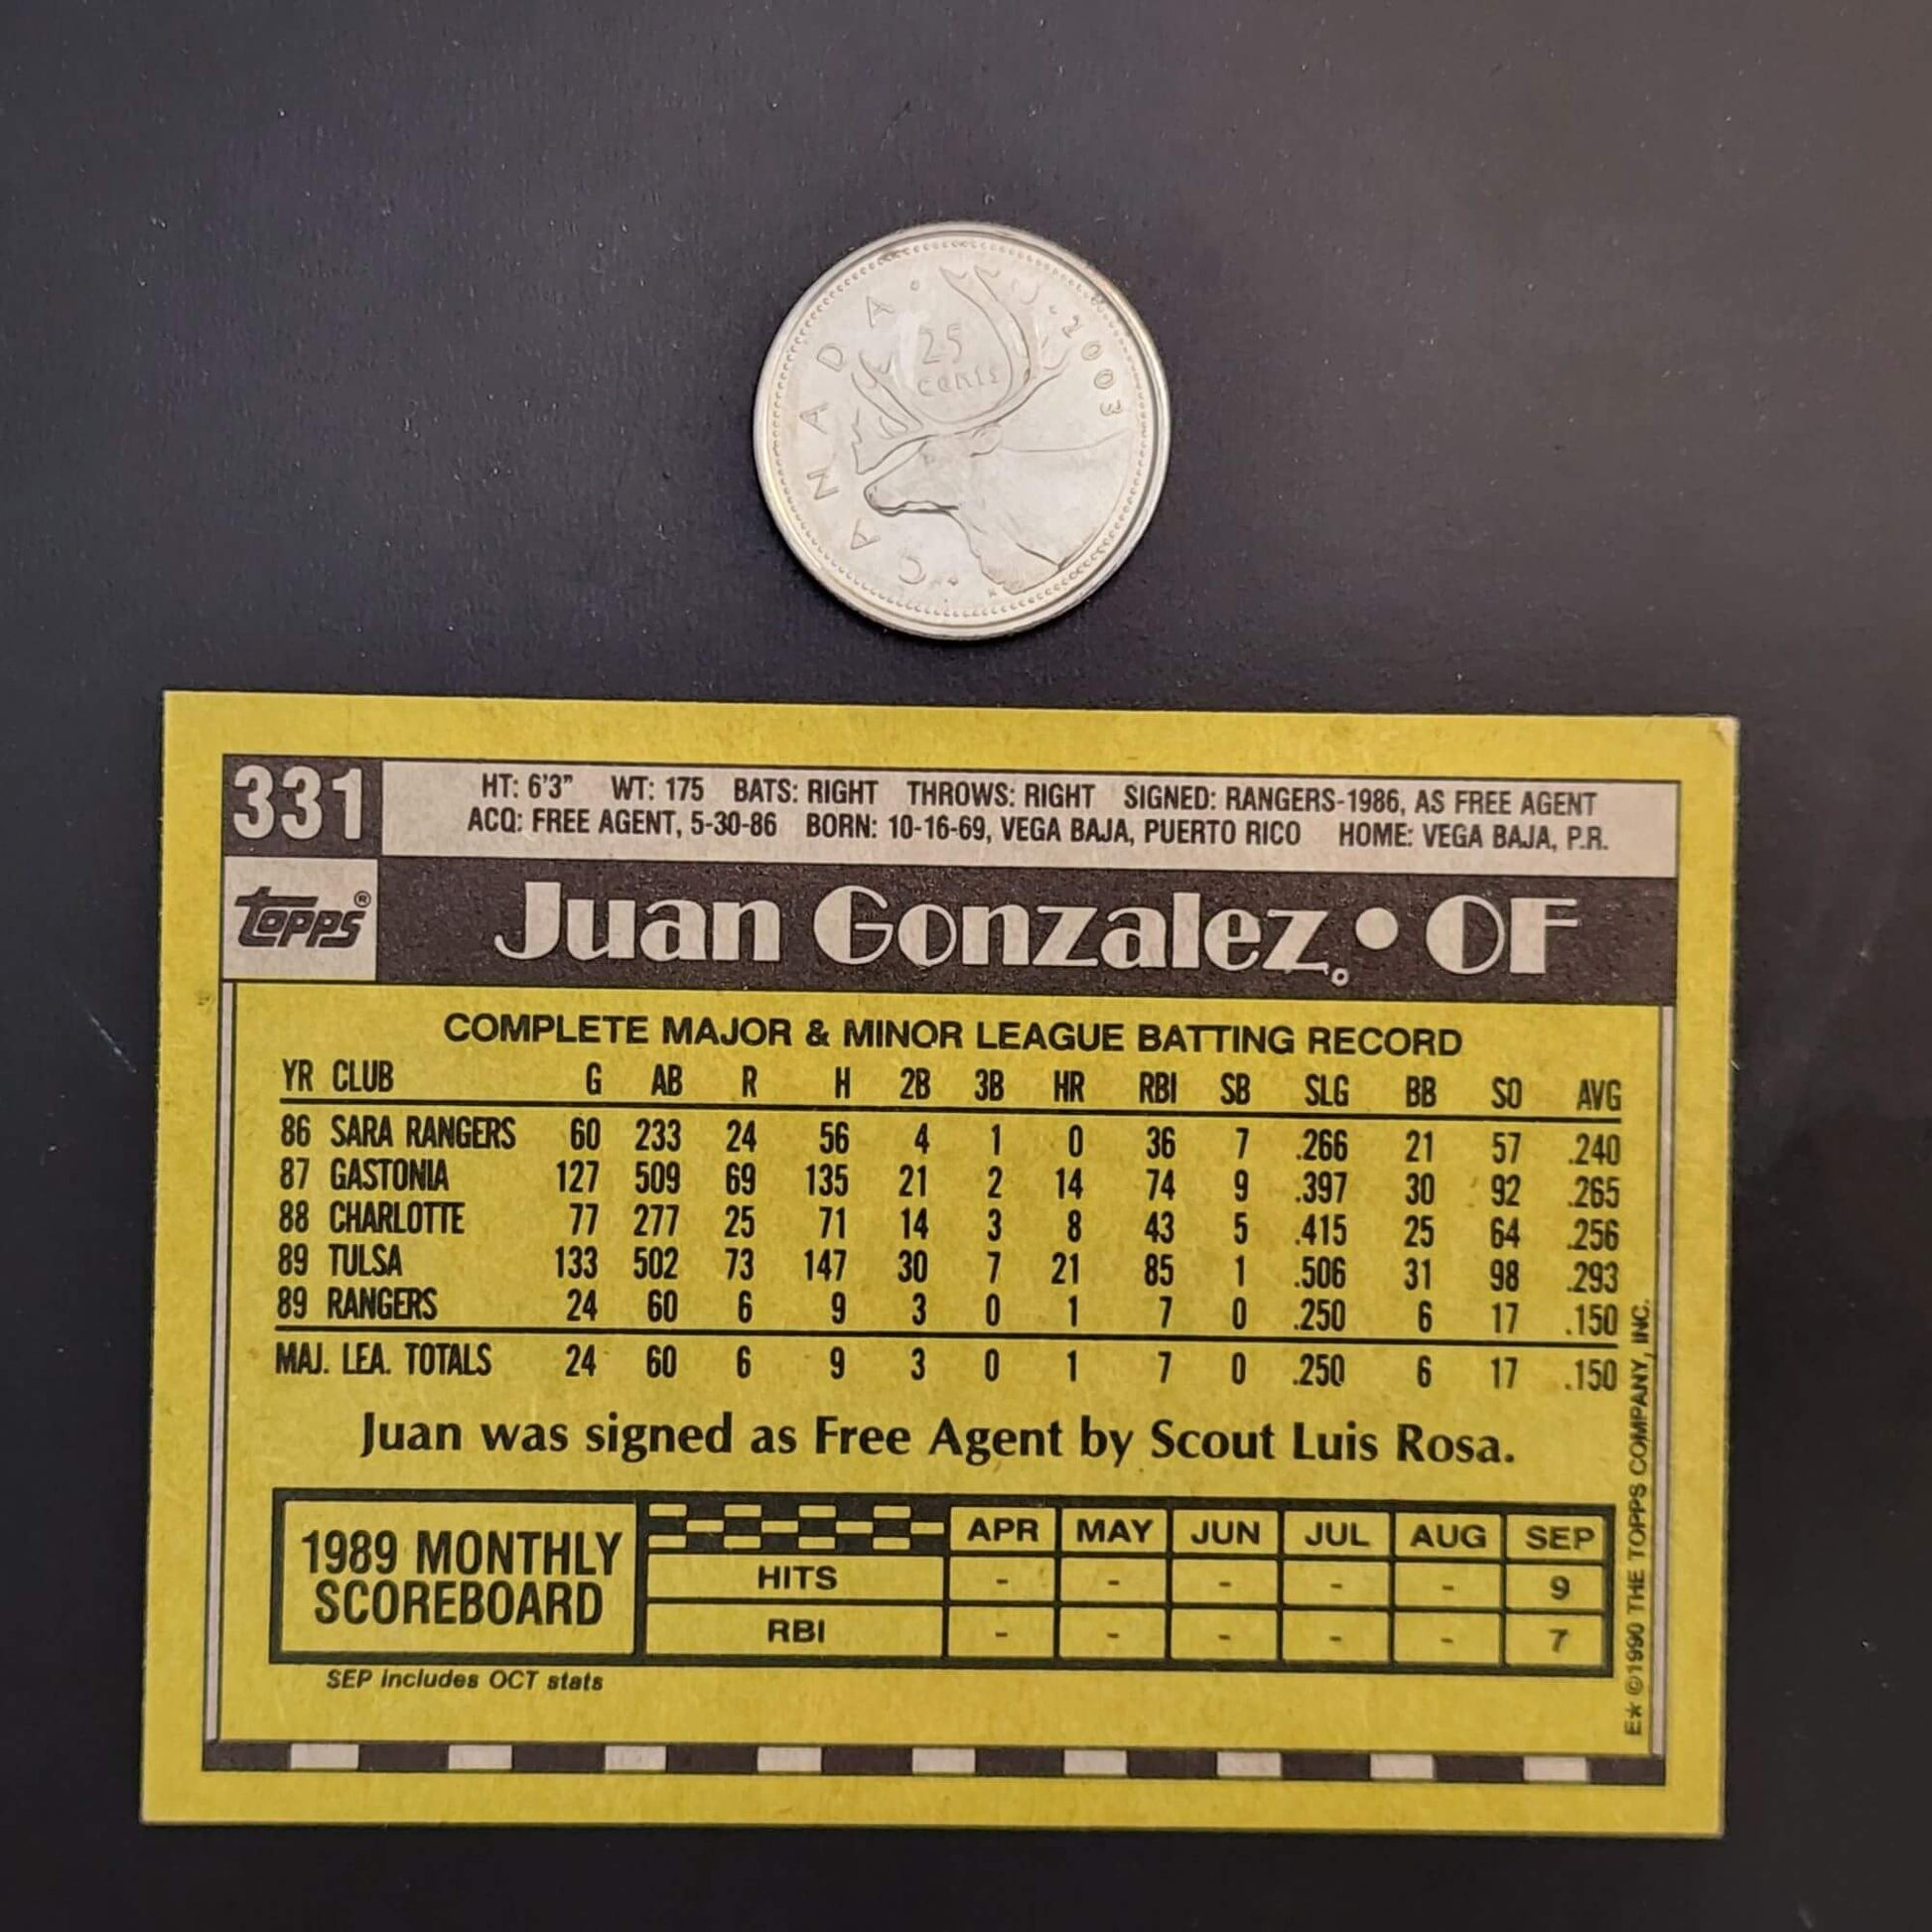 Baseball card featuring man with bat next to coin, vintage design, collectible sports memorabilia.